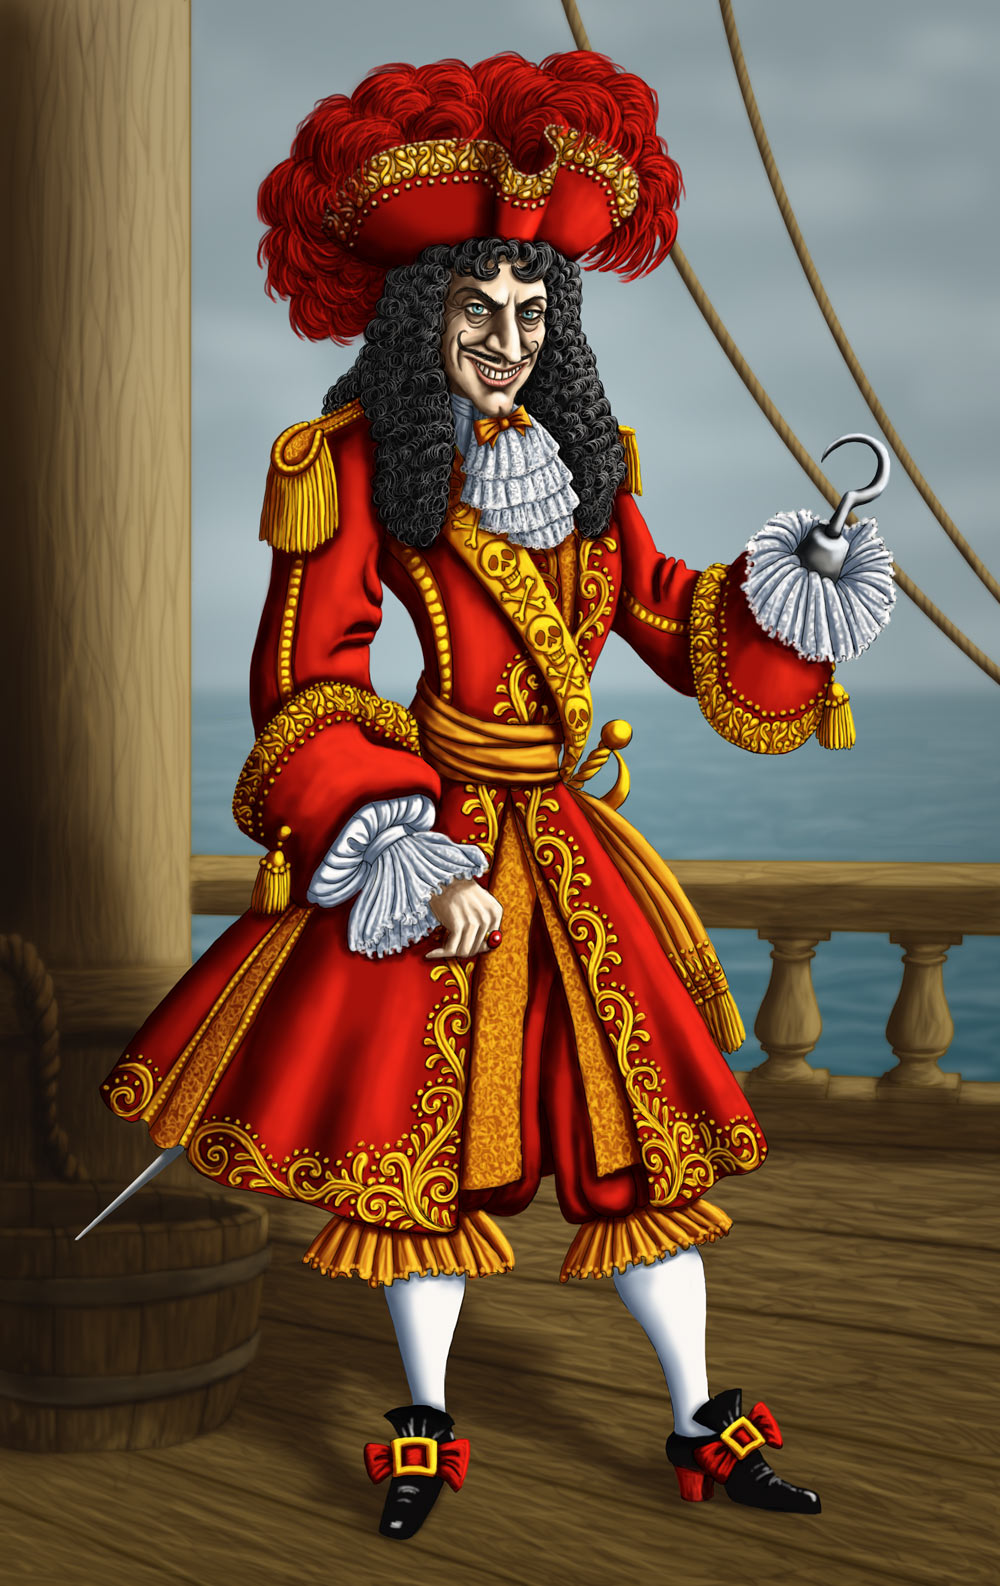 Captain Hook by Avapithecus on DeviantArt